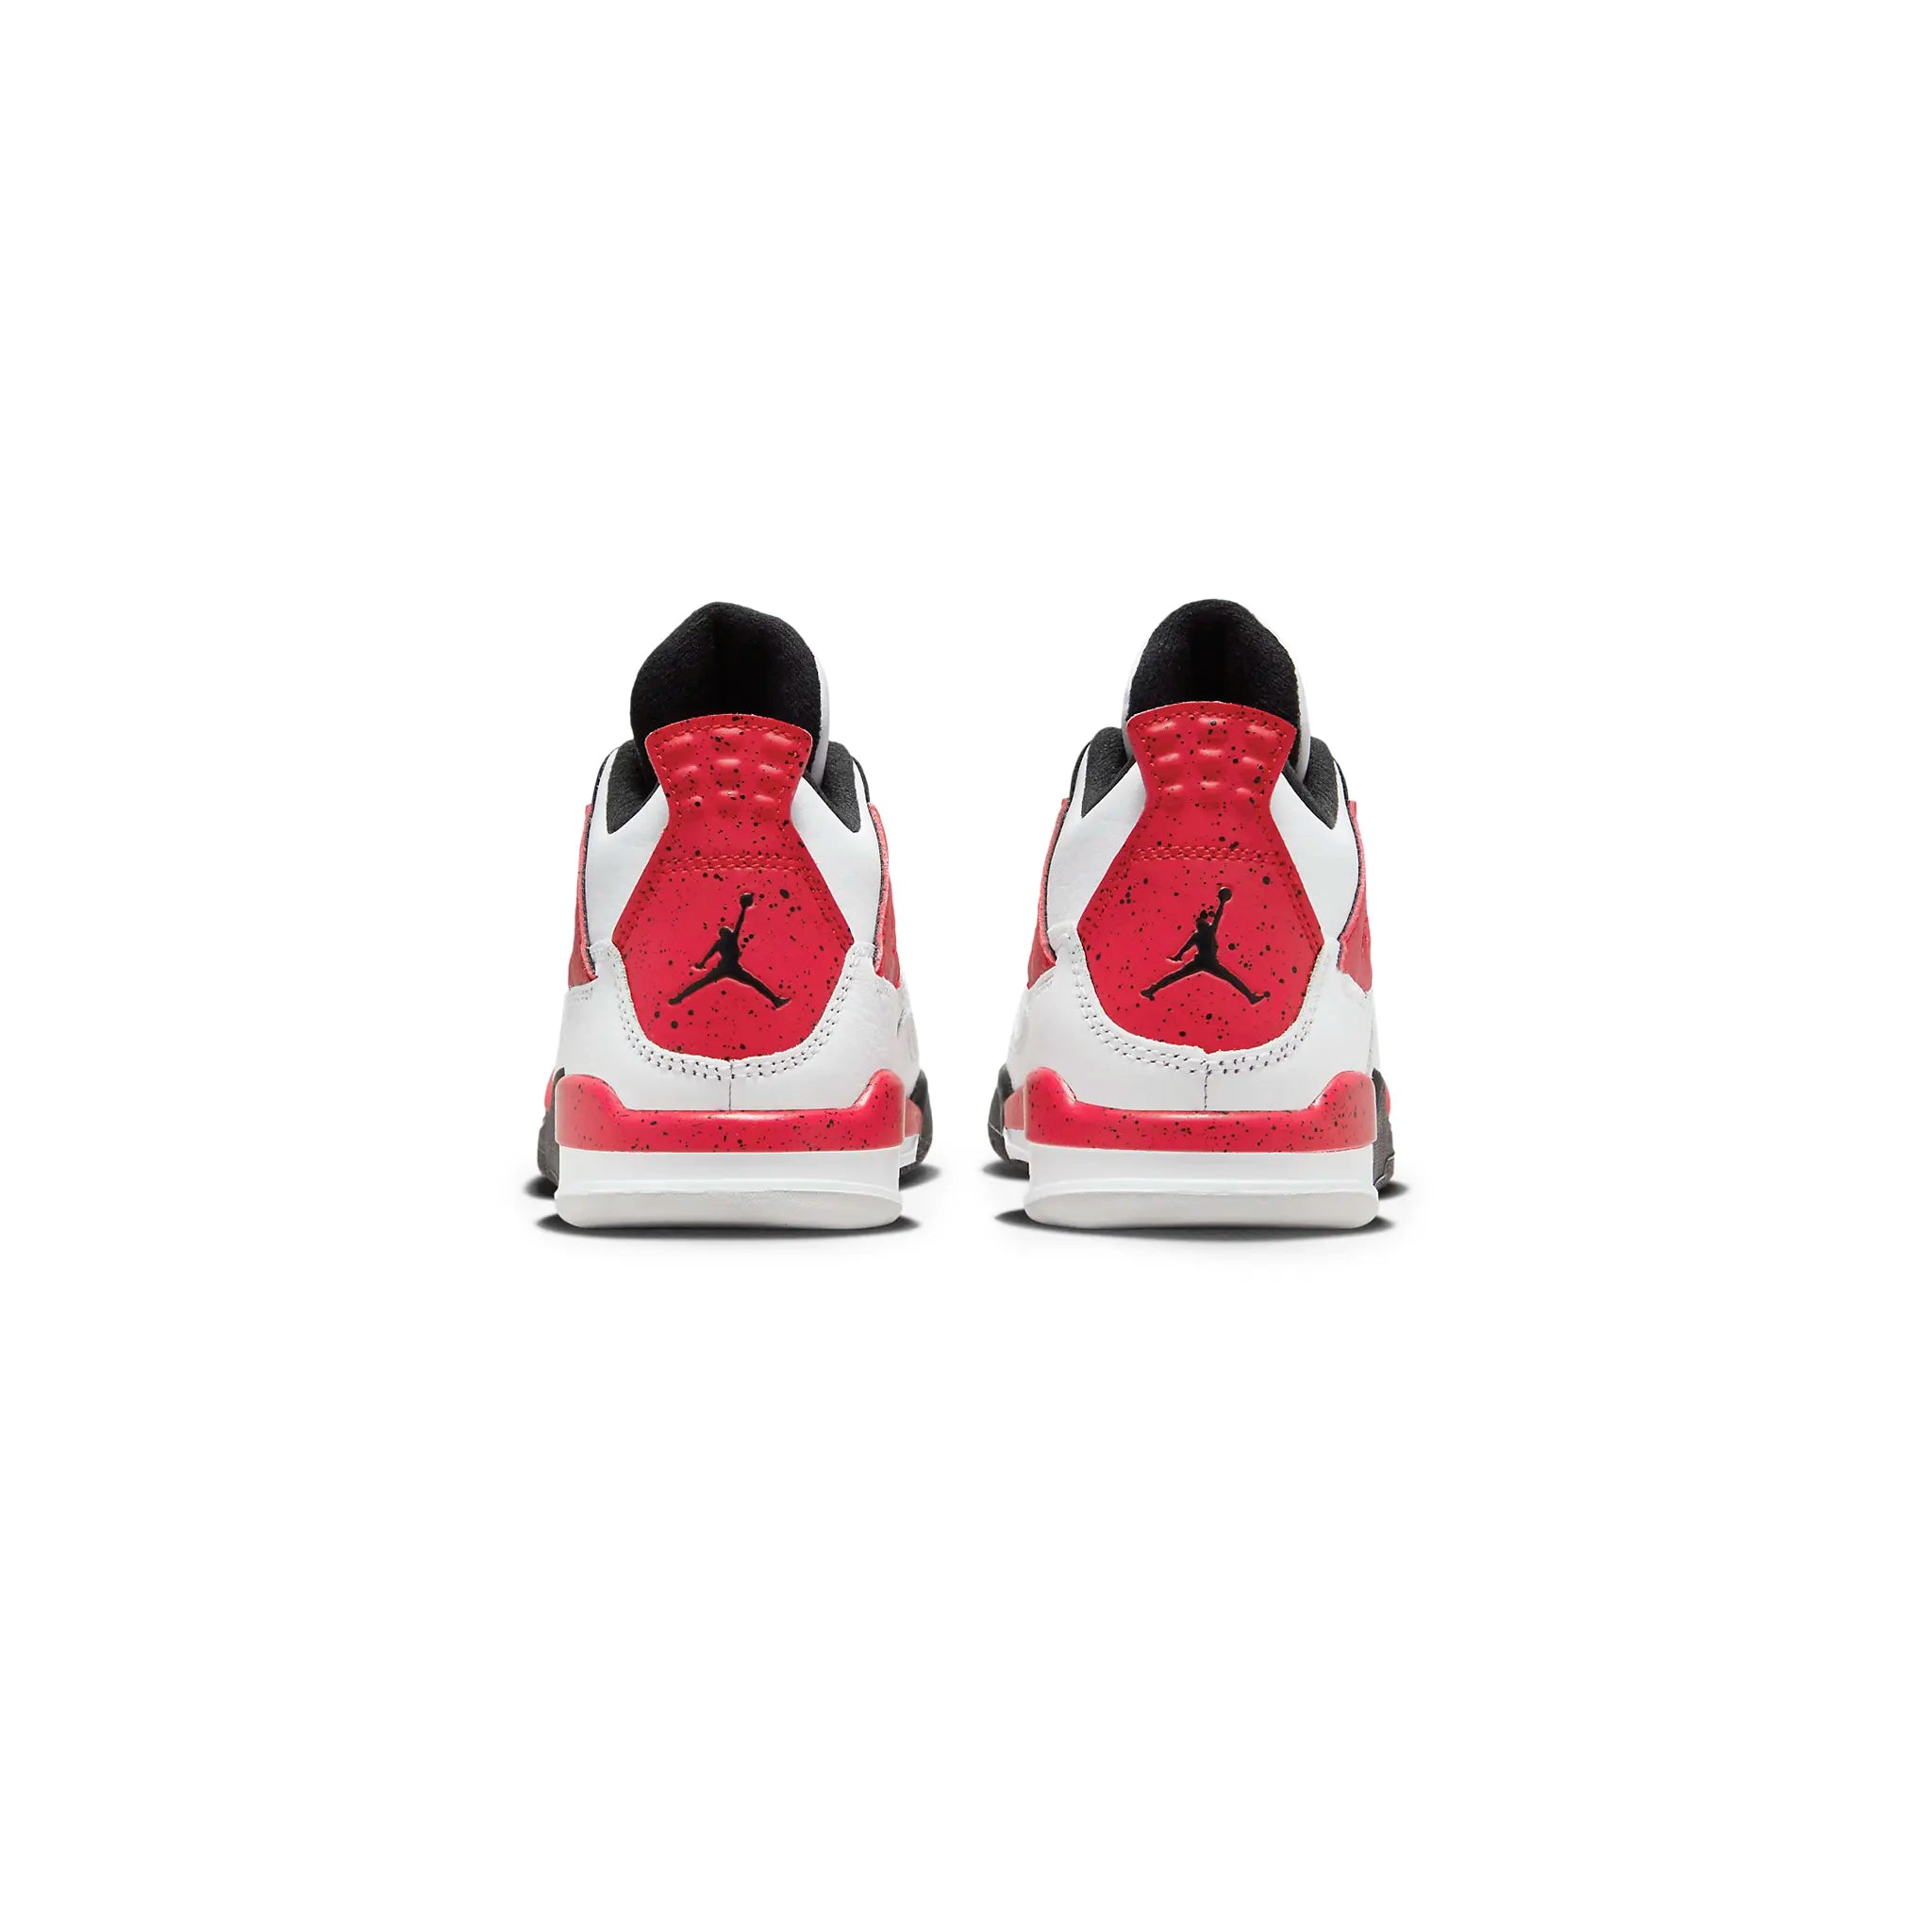 Back view of Air Jordan 4 Retro Red Cement (PS) BQ7669-161